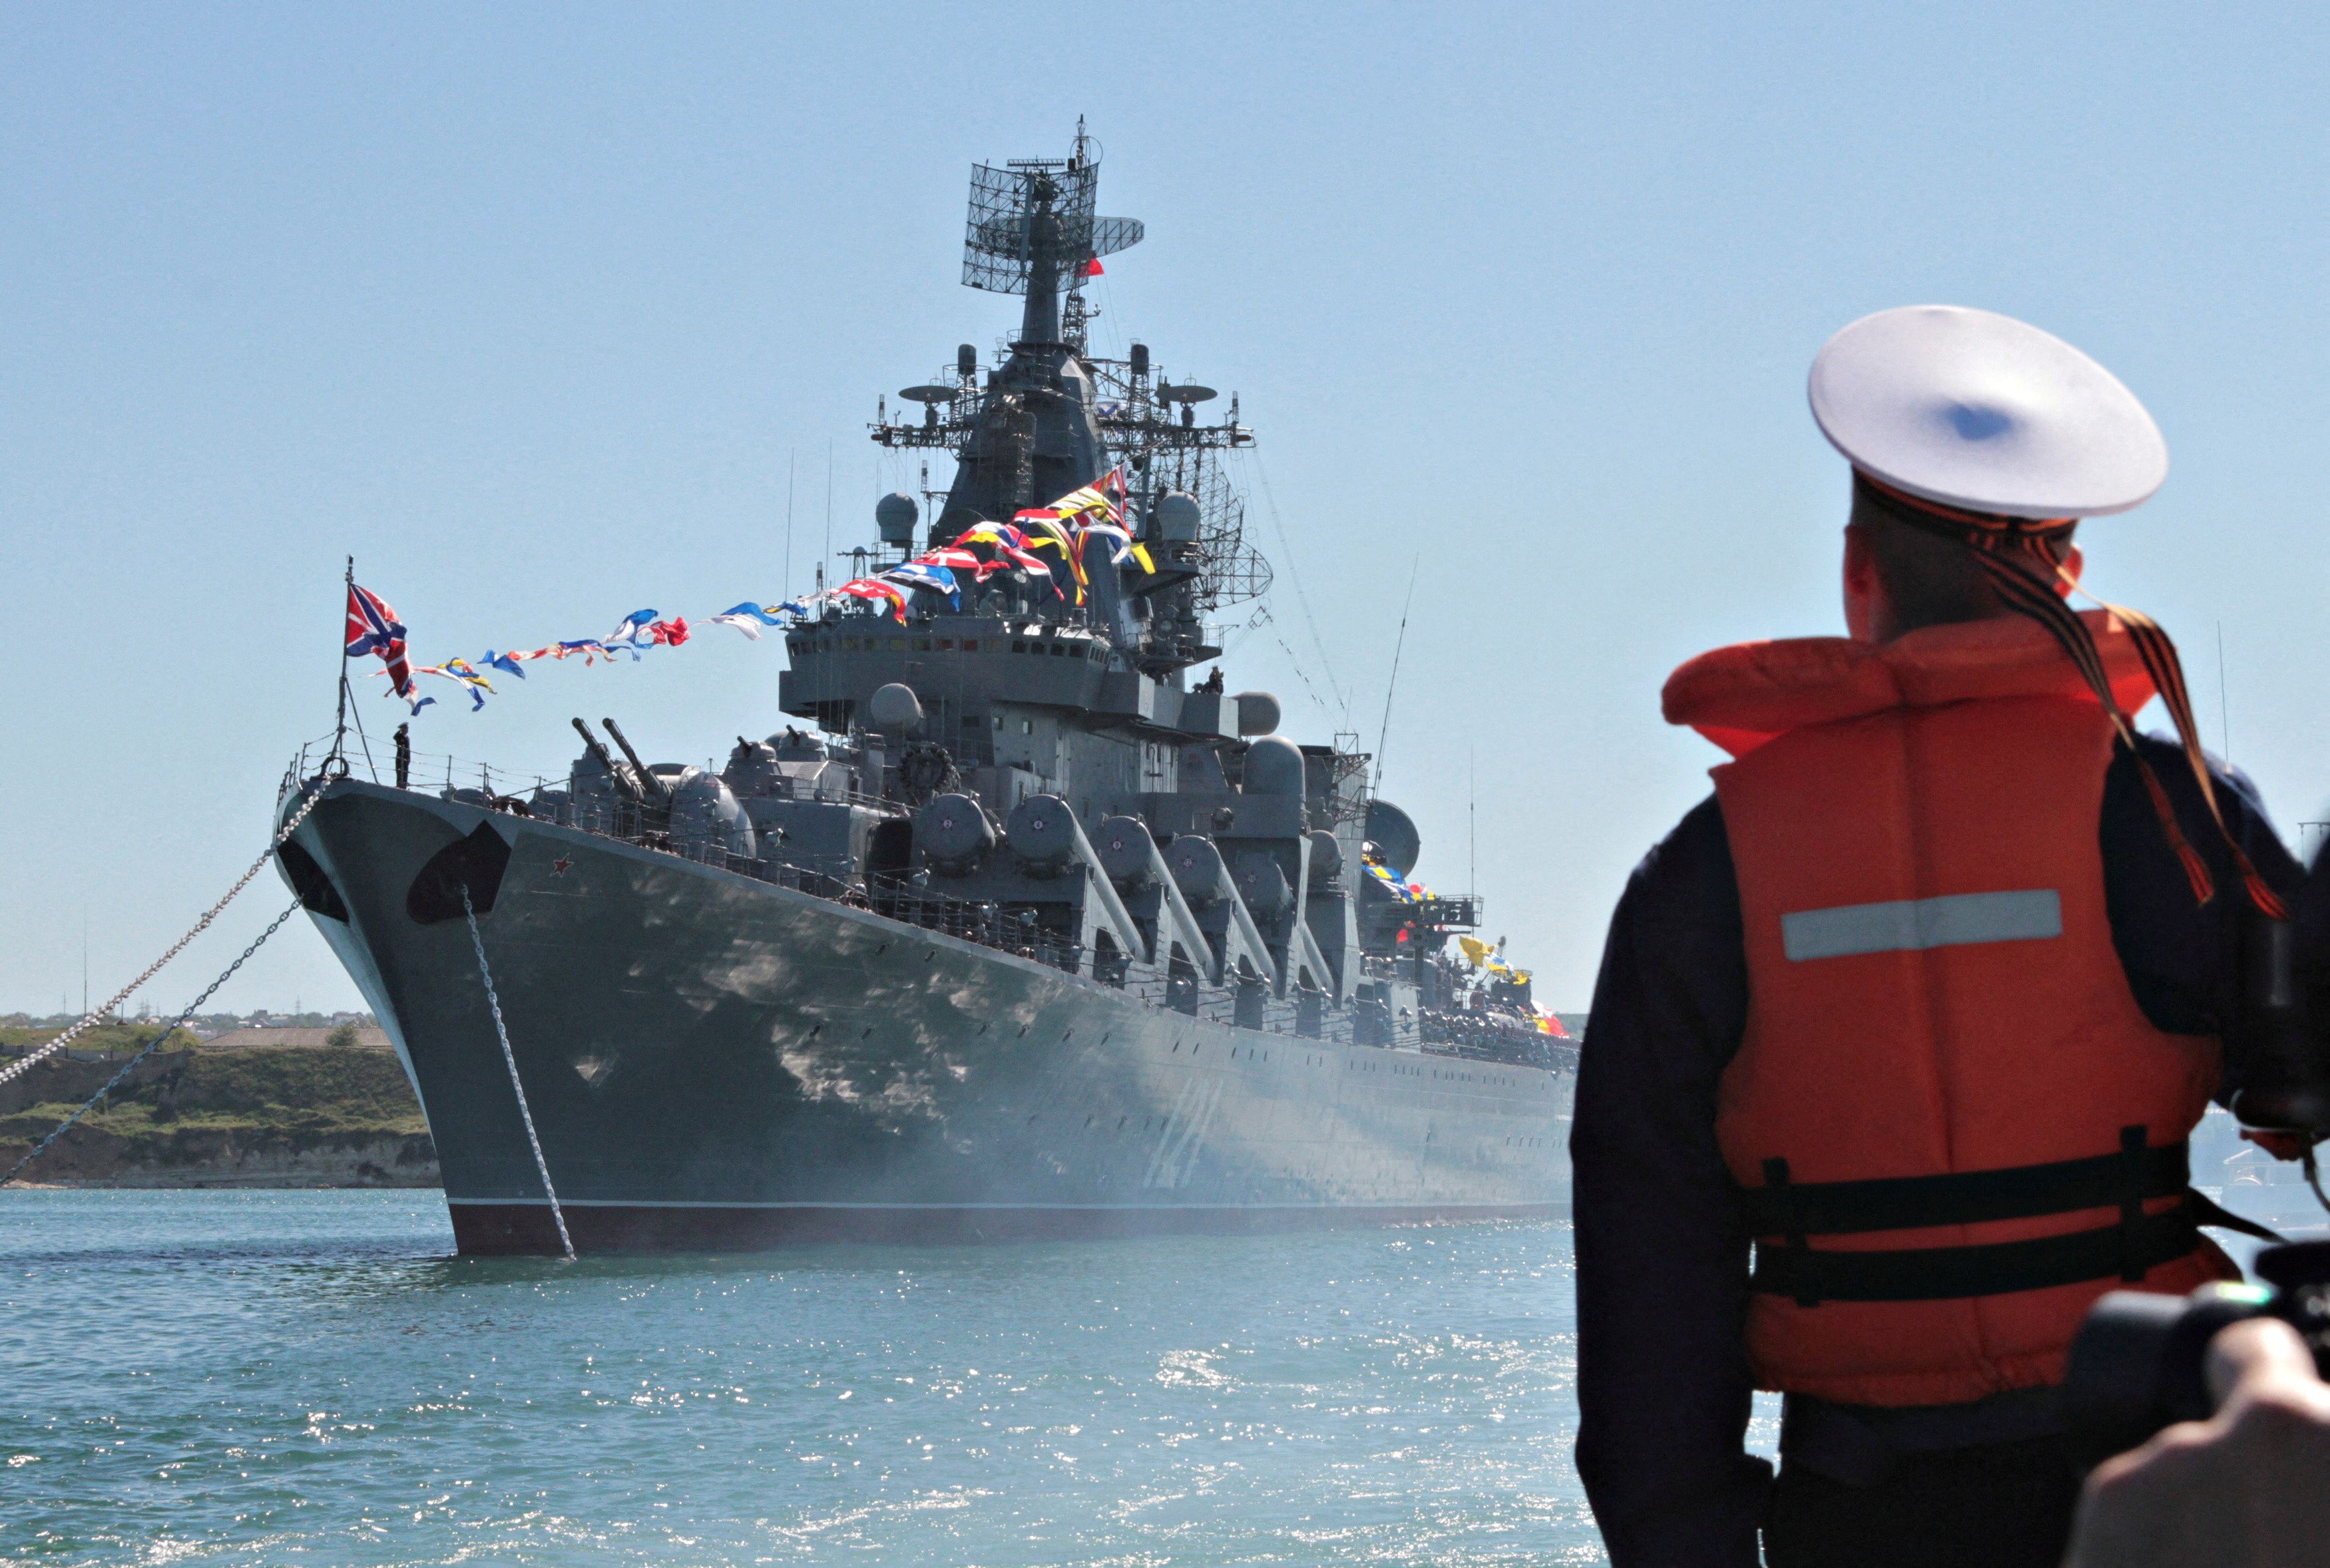 A sailor looks at the Russian missile cruiser Moskva moored in the Ukrainian Black Sea port of Sevastopol